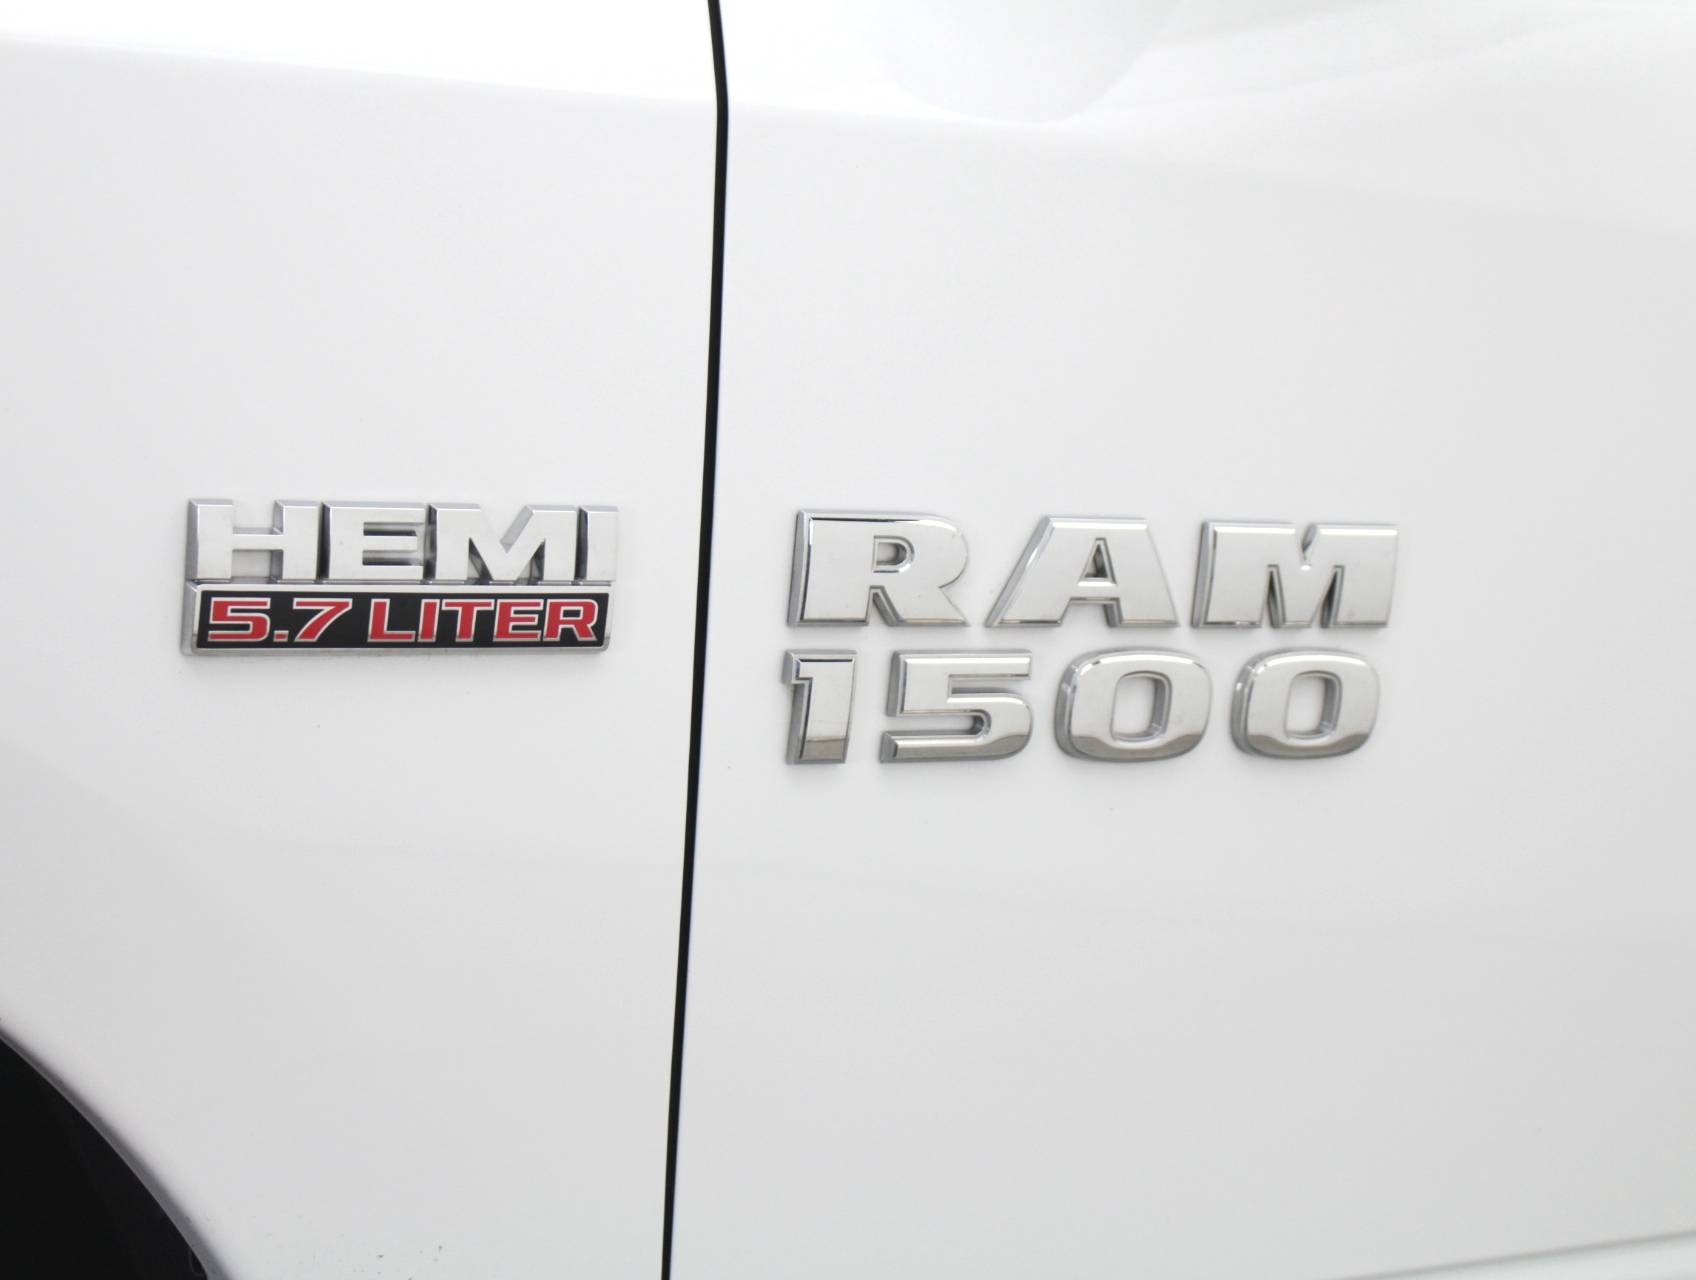 Florida Fine Cars - Used RAM 1500 2017 HOLLYWOOD Slt Big Horn 4x4